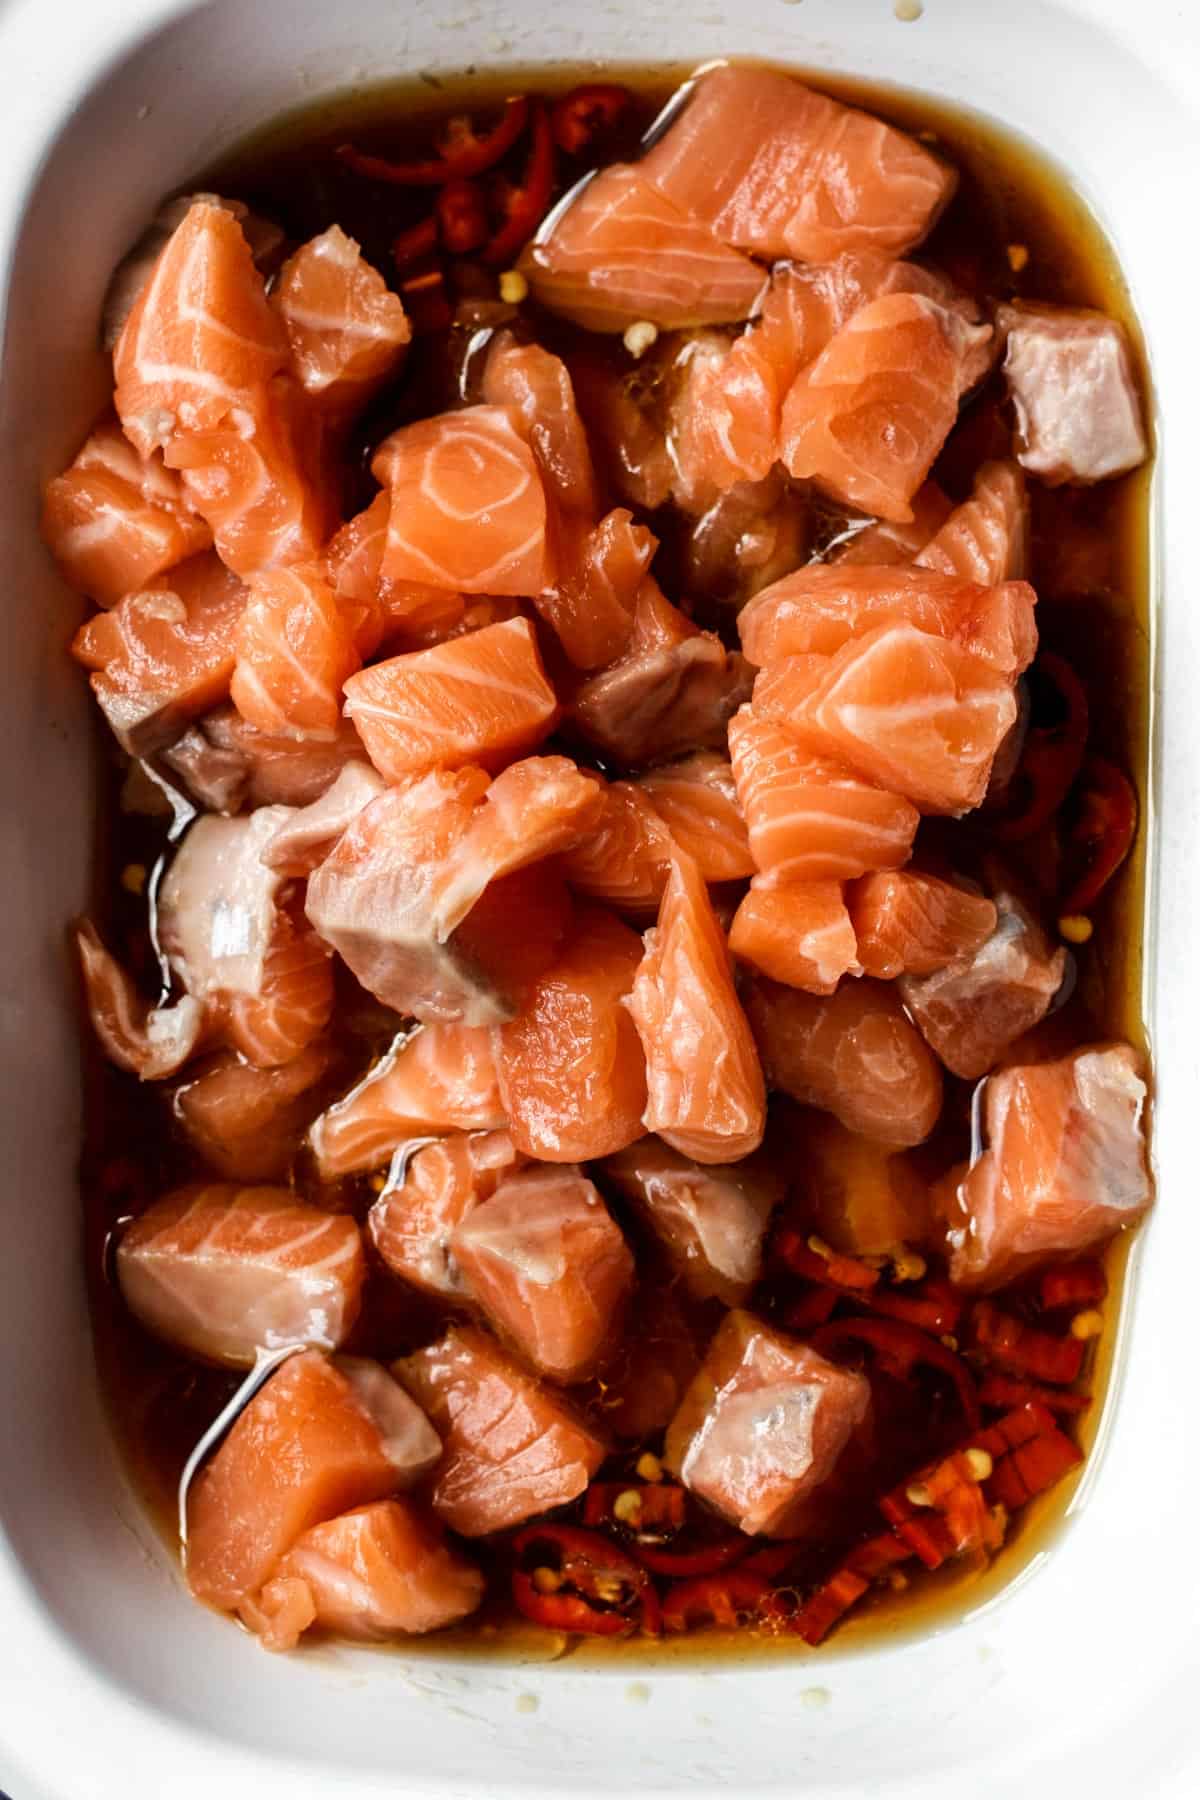 salmon marinating in bowl